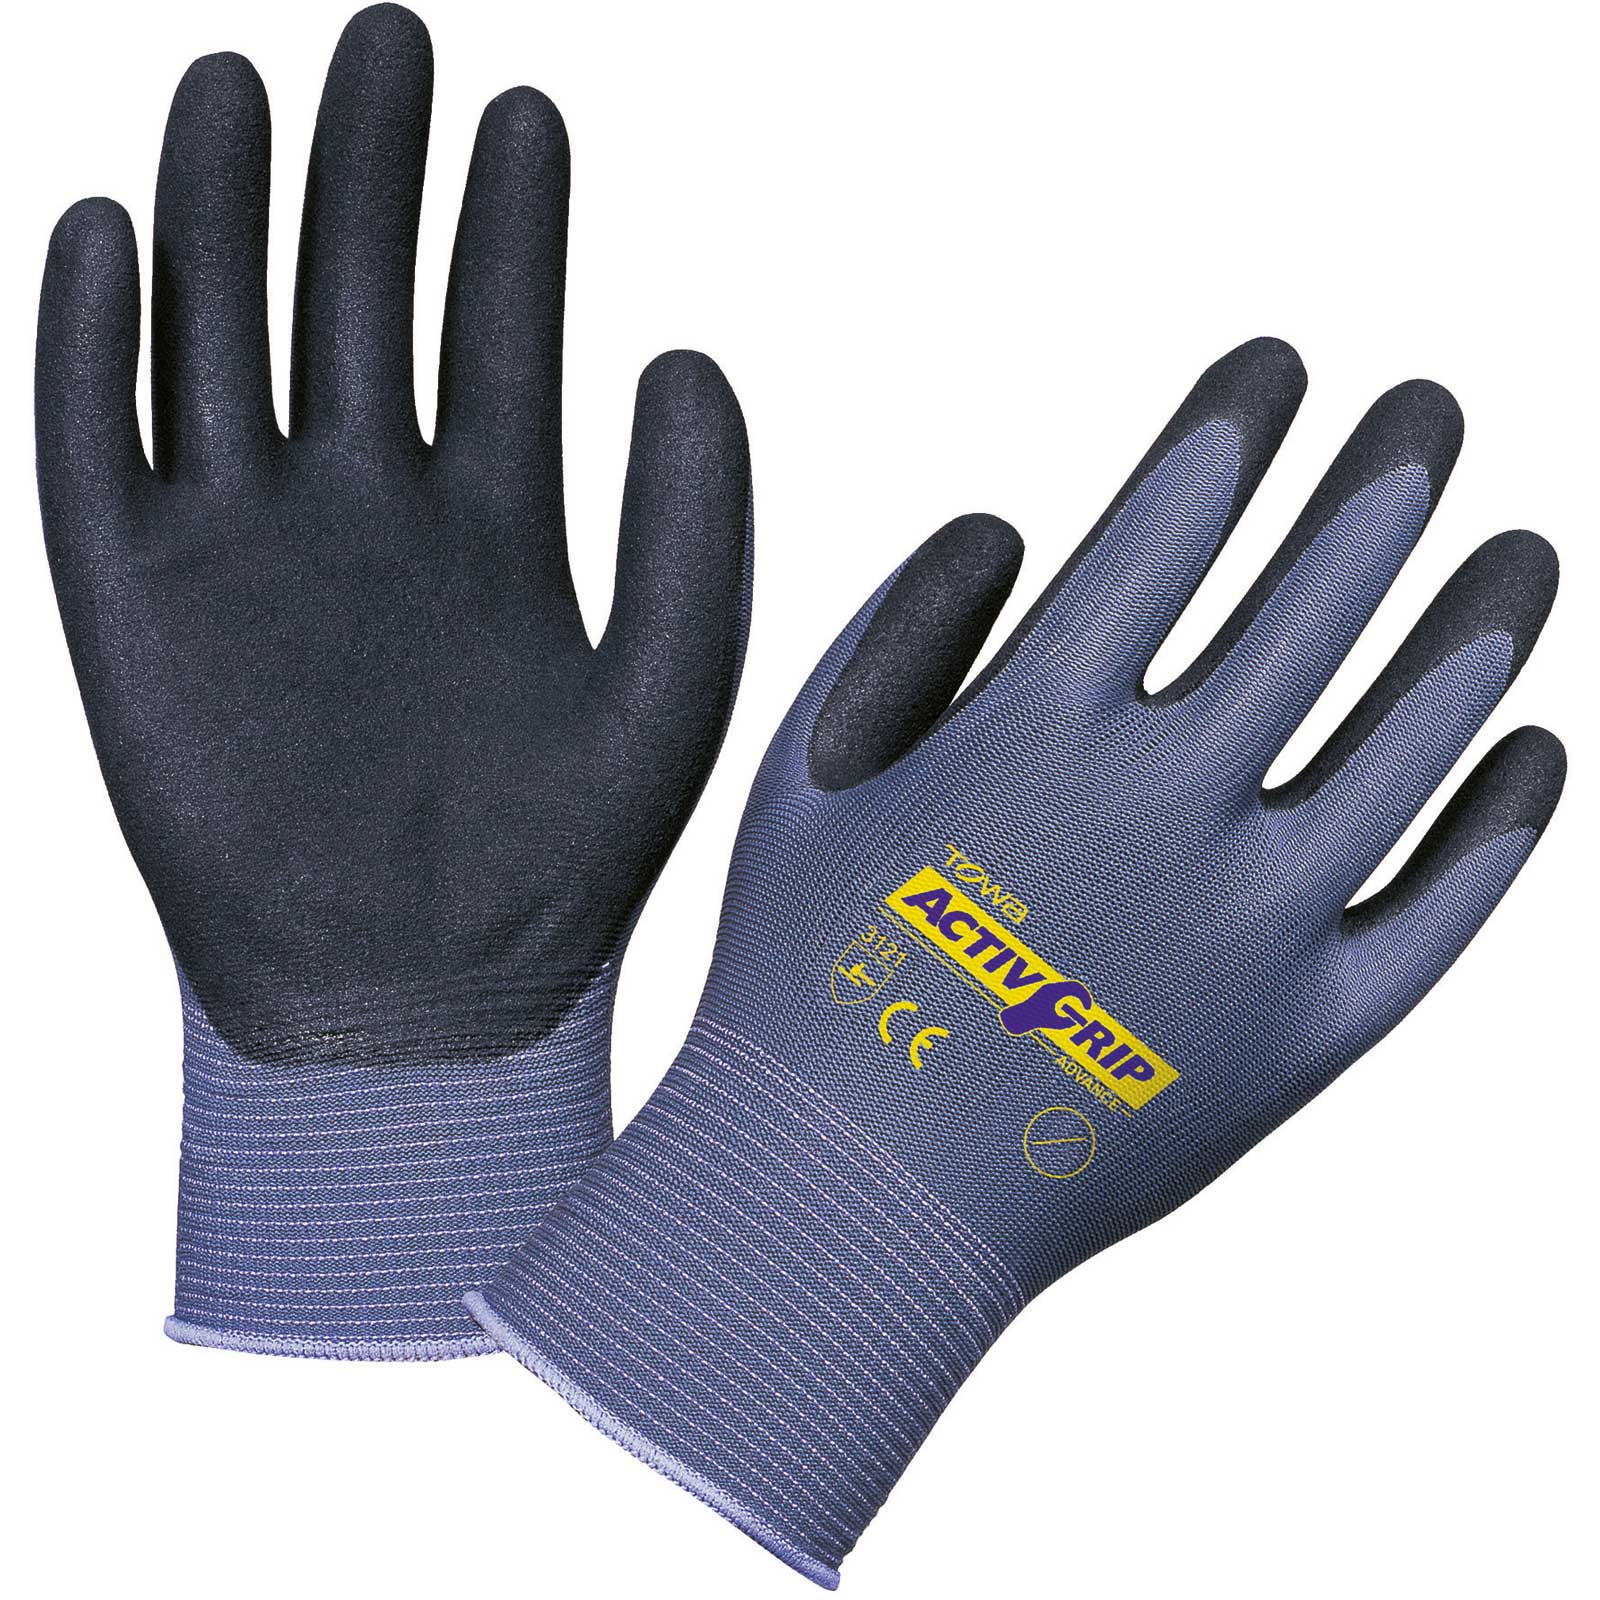 Fine-knit Glove Activ Grip Advance 8